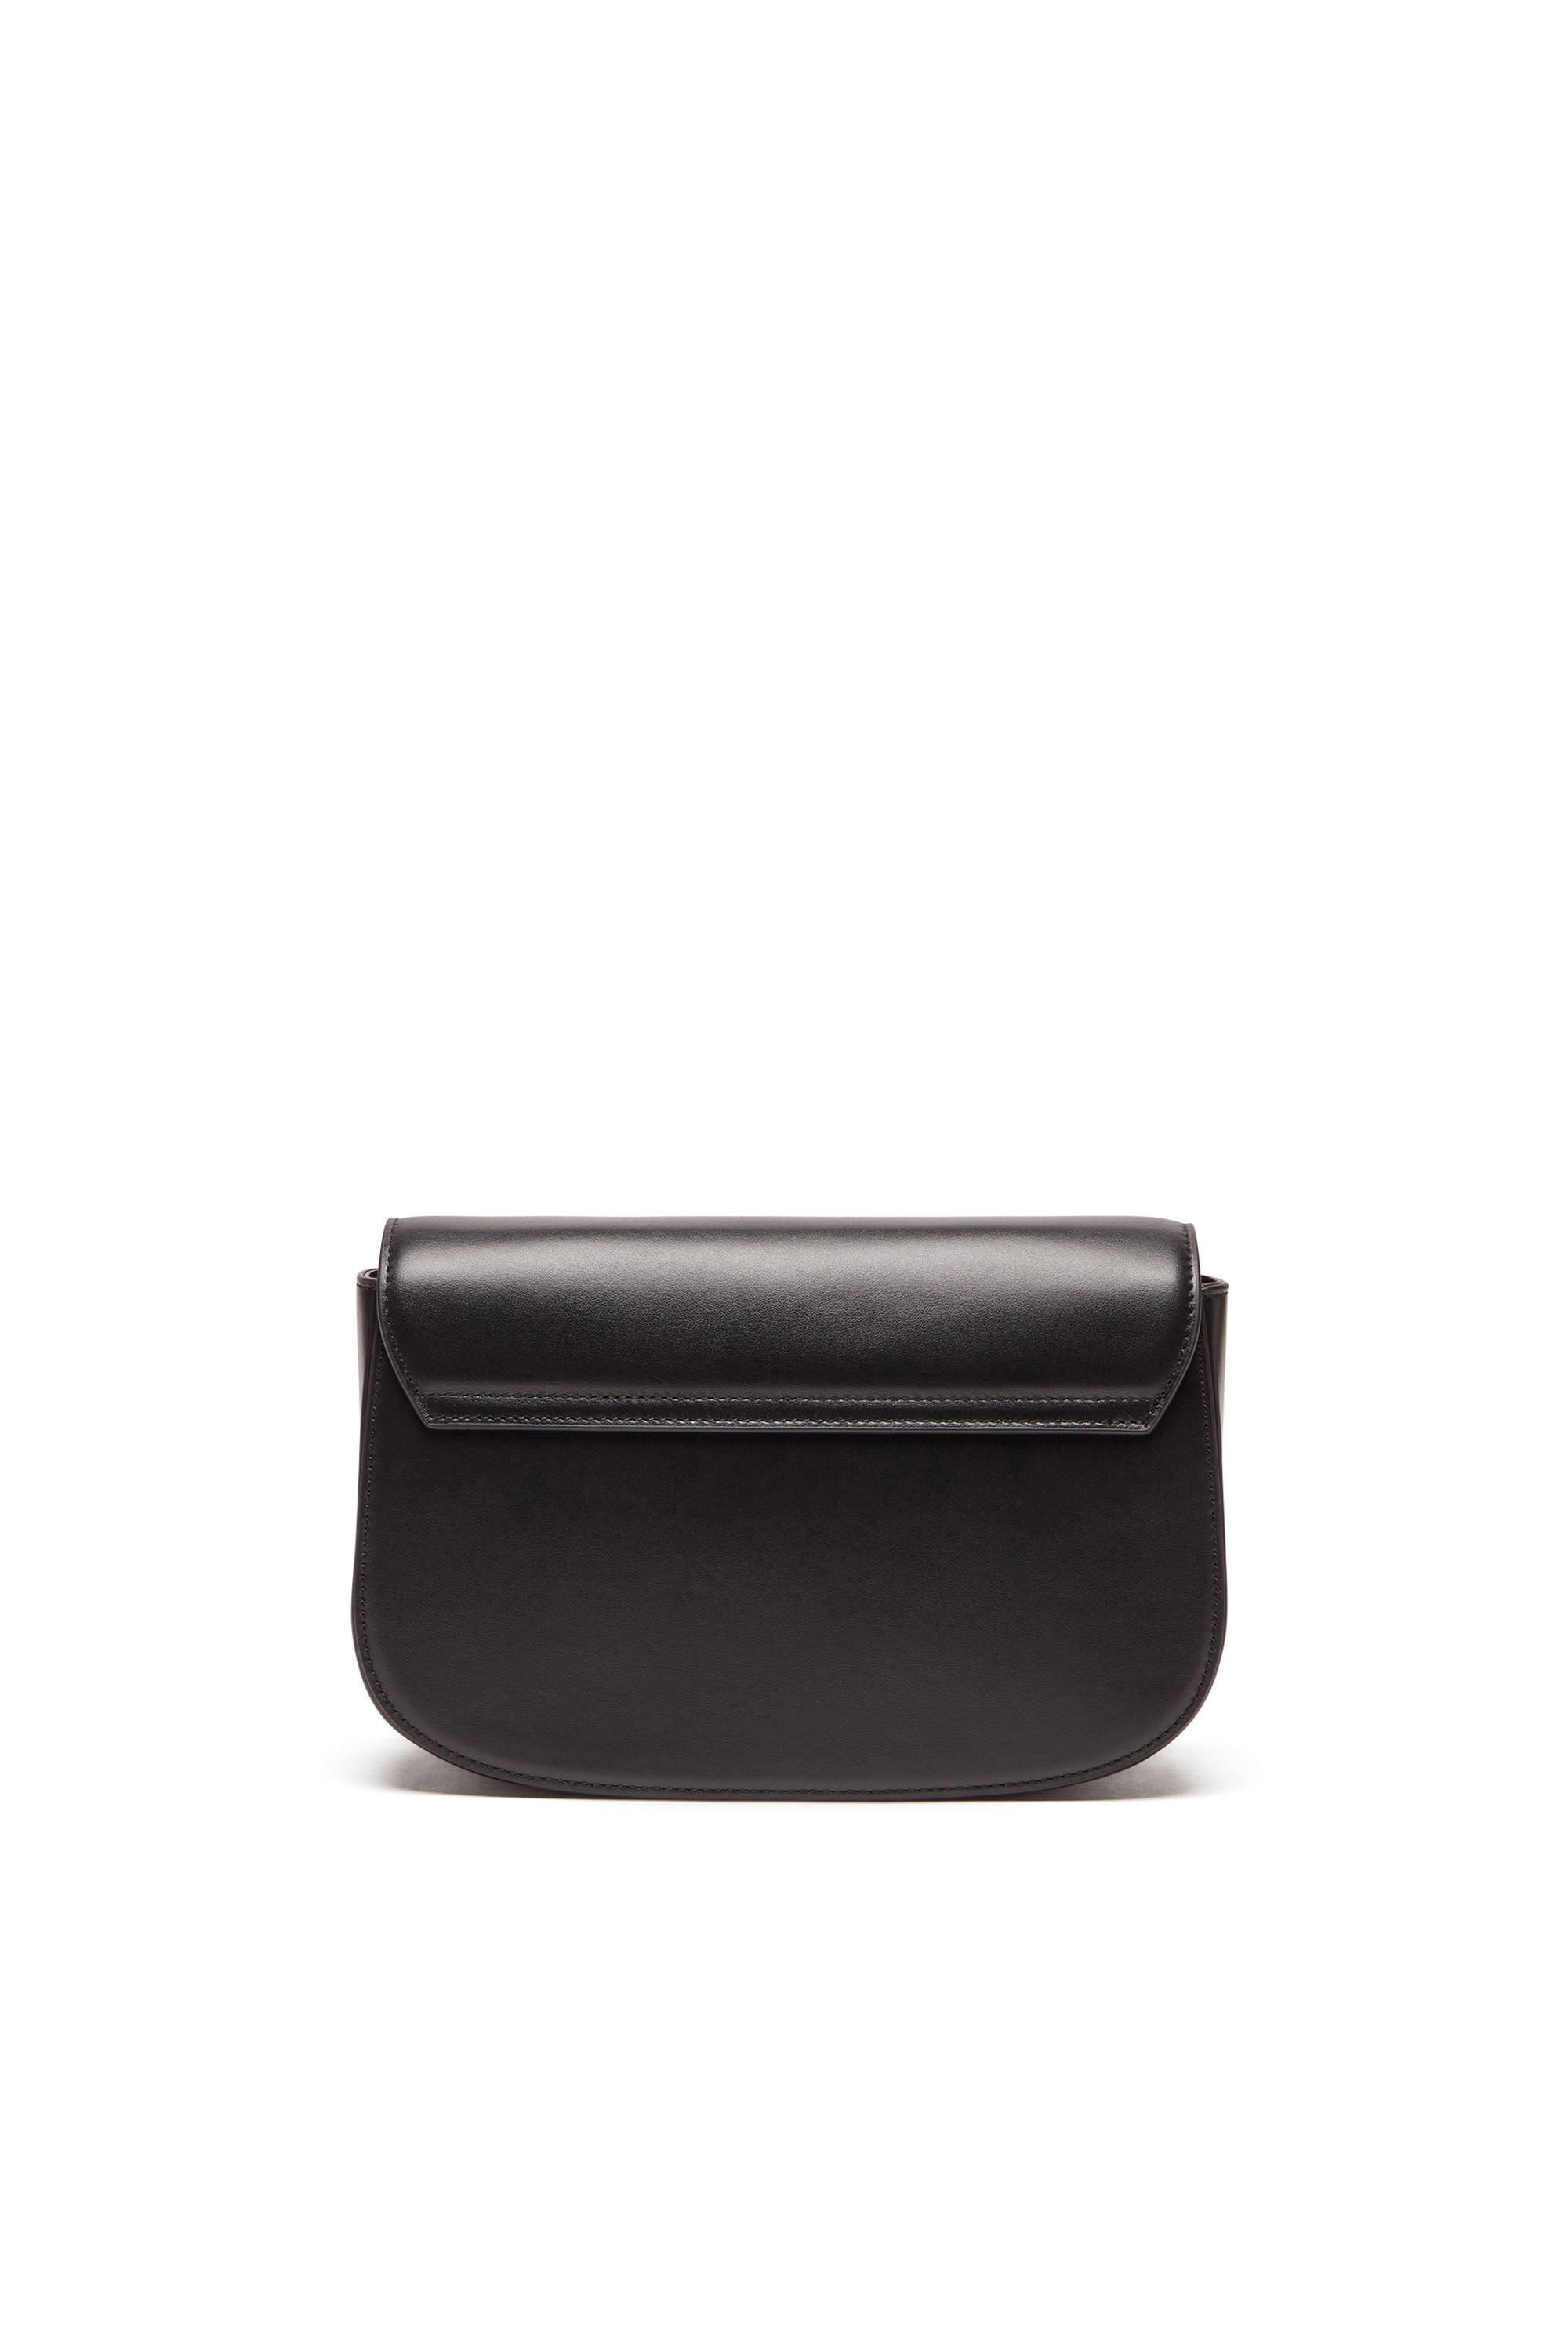 Diesel - 1DR M, Woman 1DR M-Iconic medium shoulder bag in leather in Black - Image 3